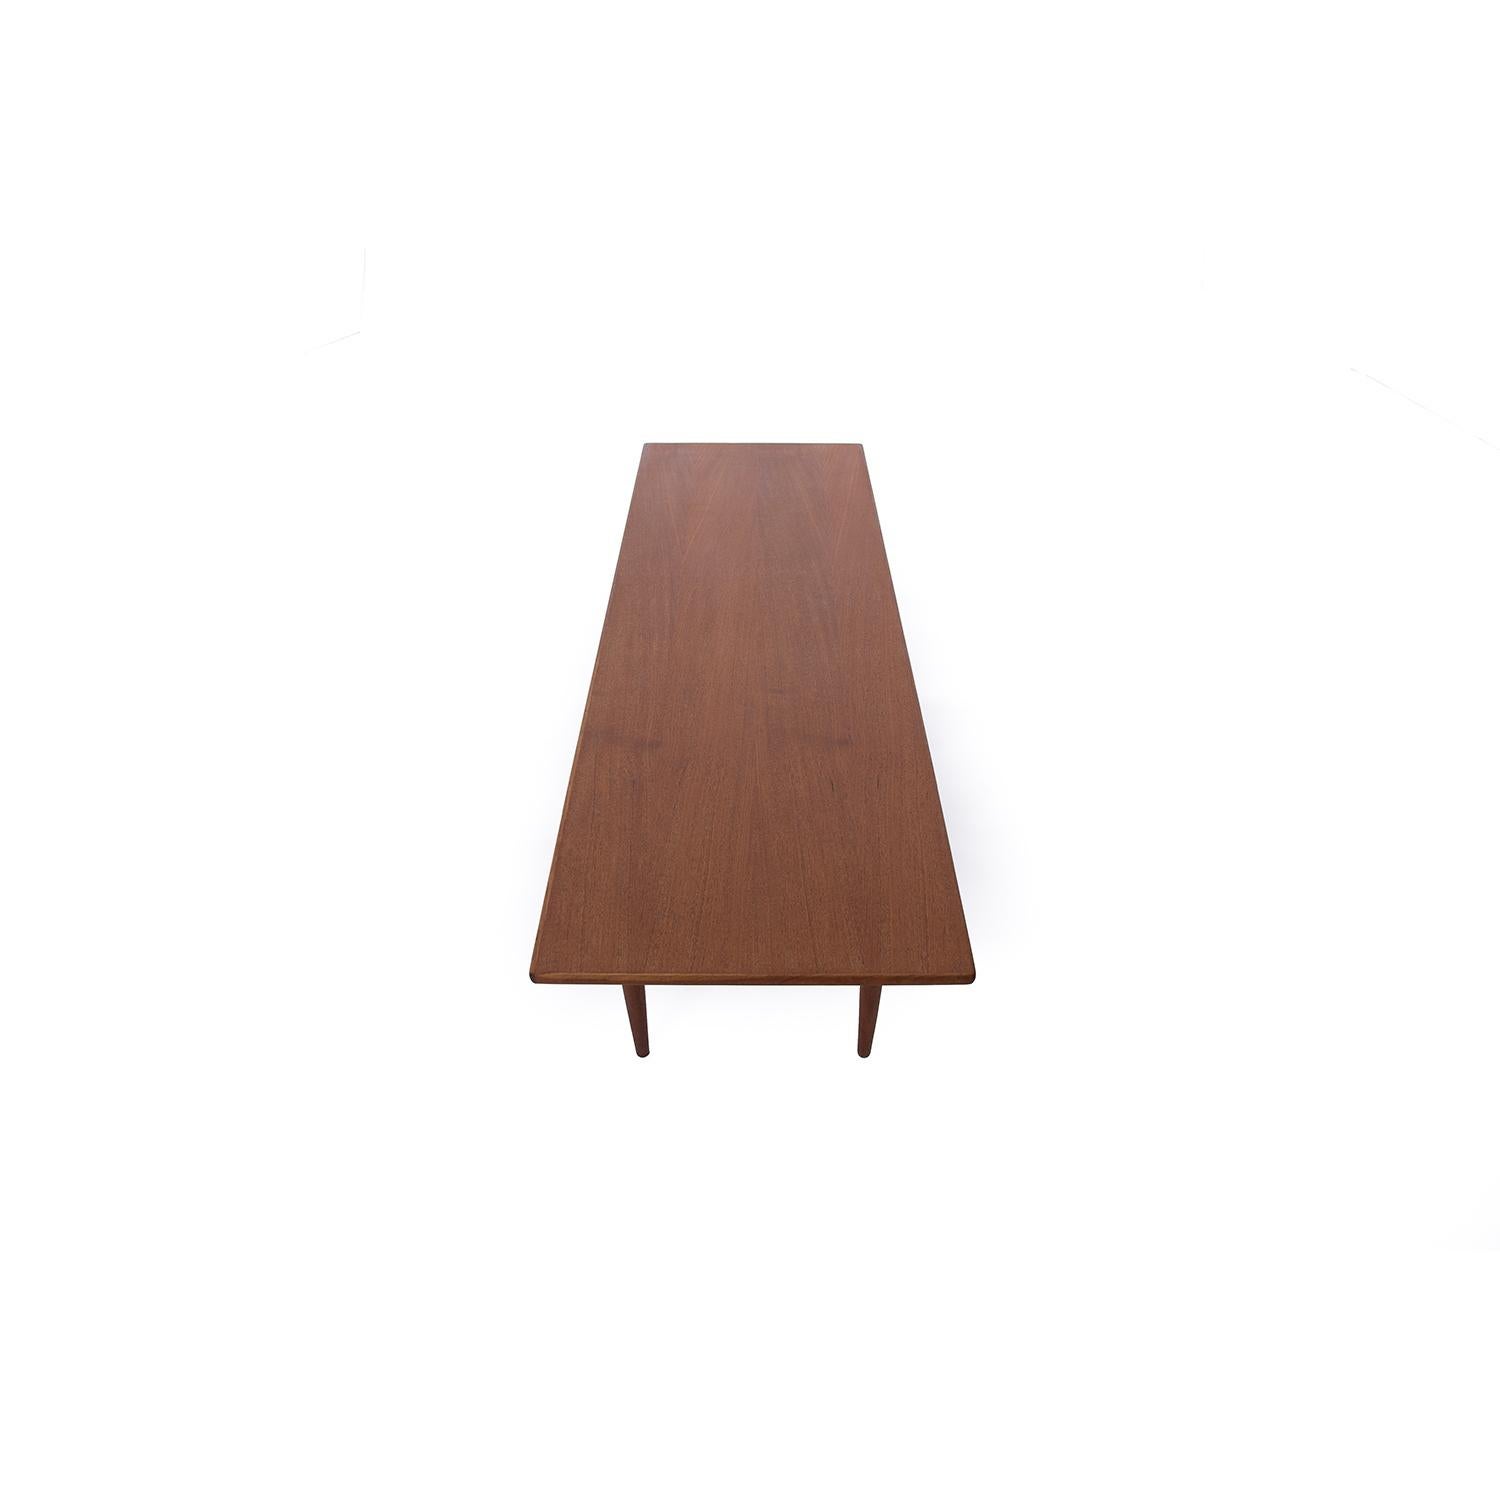 Oiled Scandinavian Modern Teak Coffee Table with Turned Legs & Solid Shelf